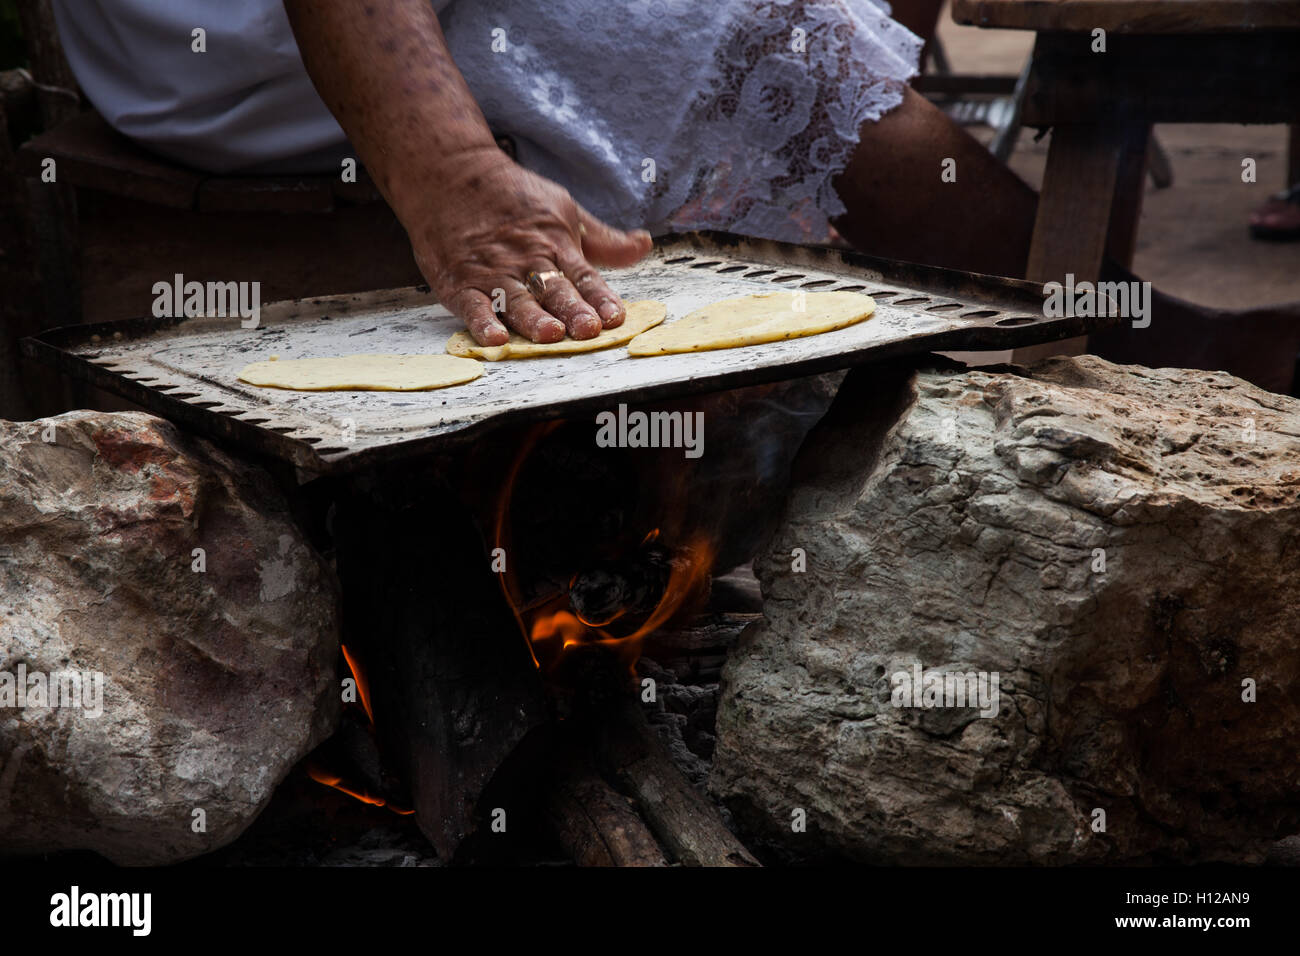 https://c8.alamy.com/comp/H12AN9/a-senior-woman-making-tortillas-in-a-metal-hotplate-called-comal-being-H12AN9.jpg